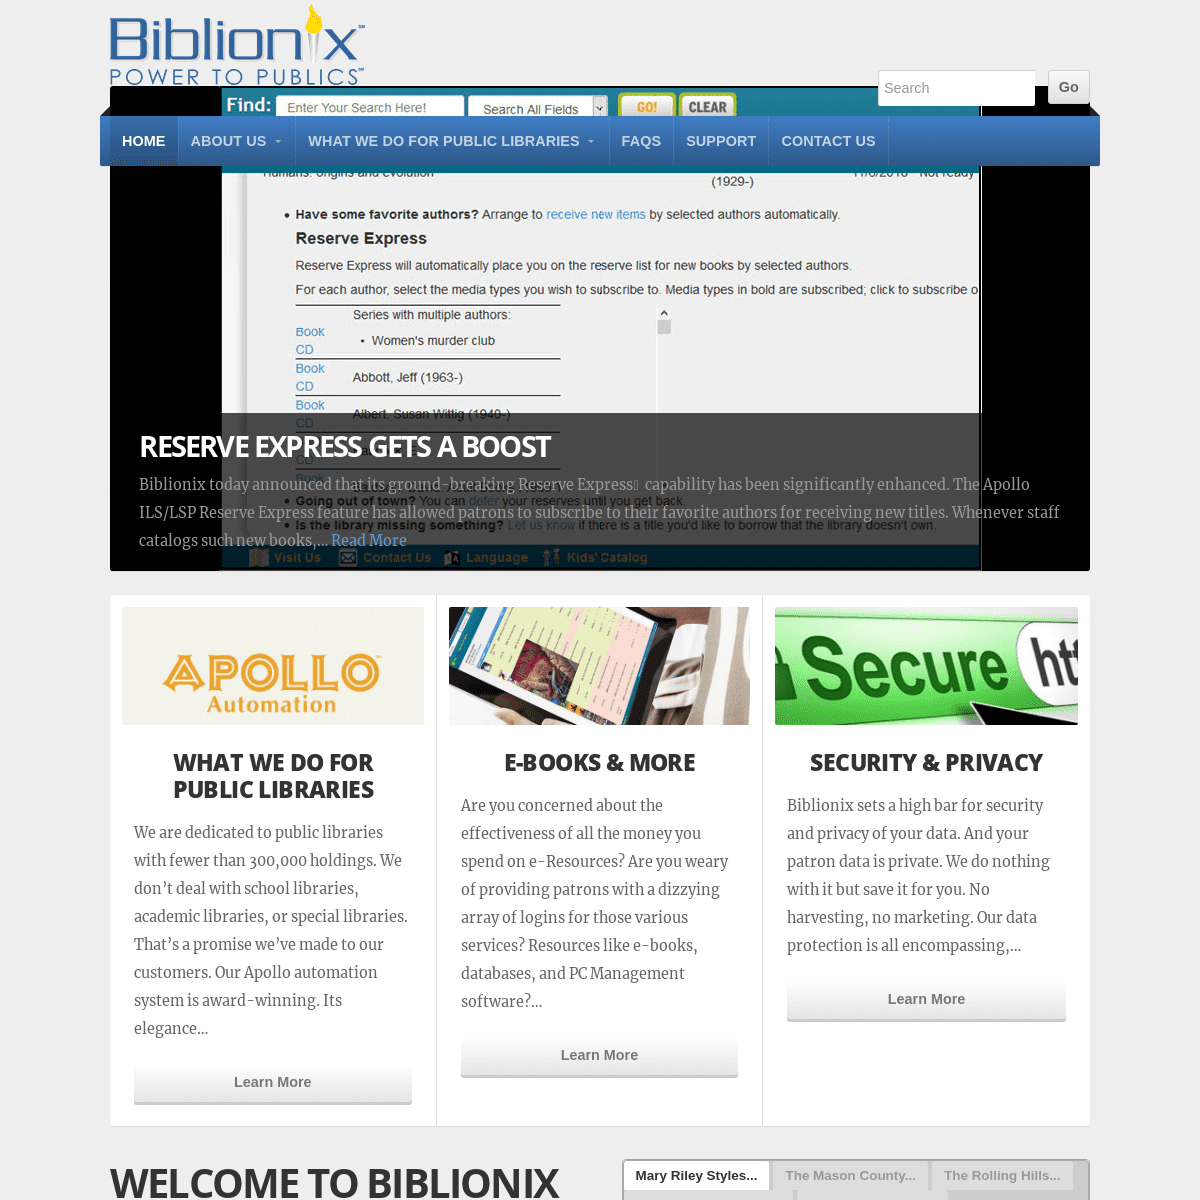 A complete backup of biblionix.com